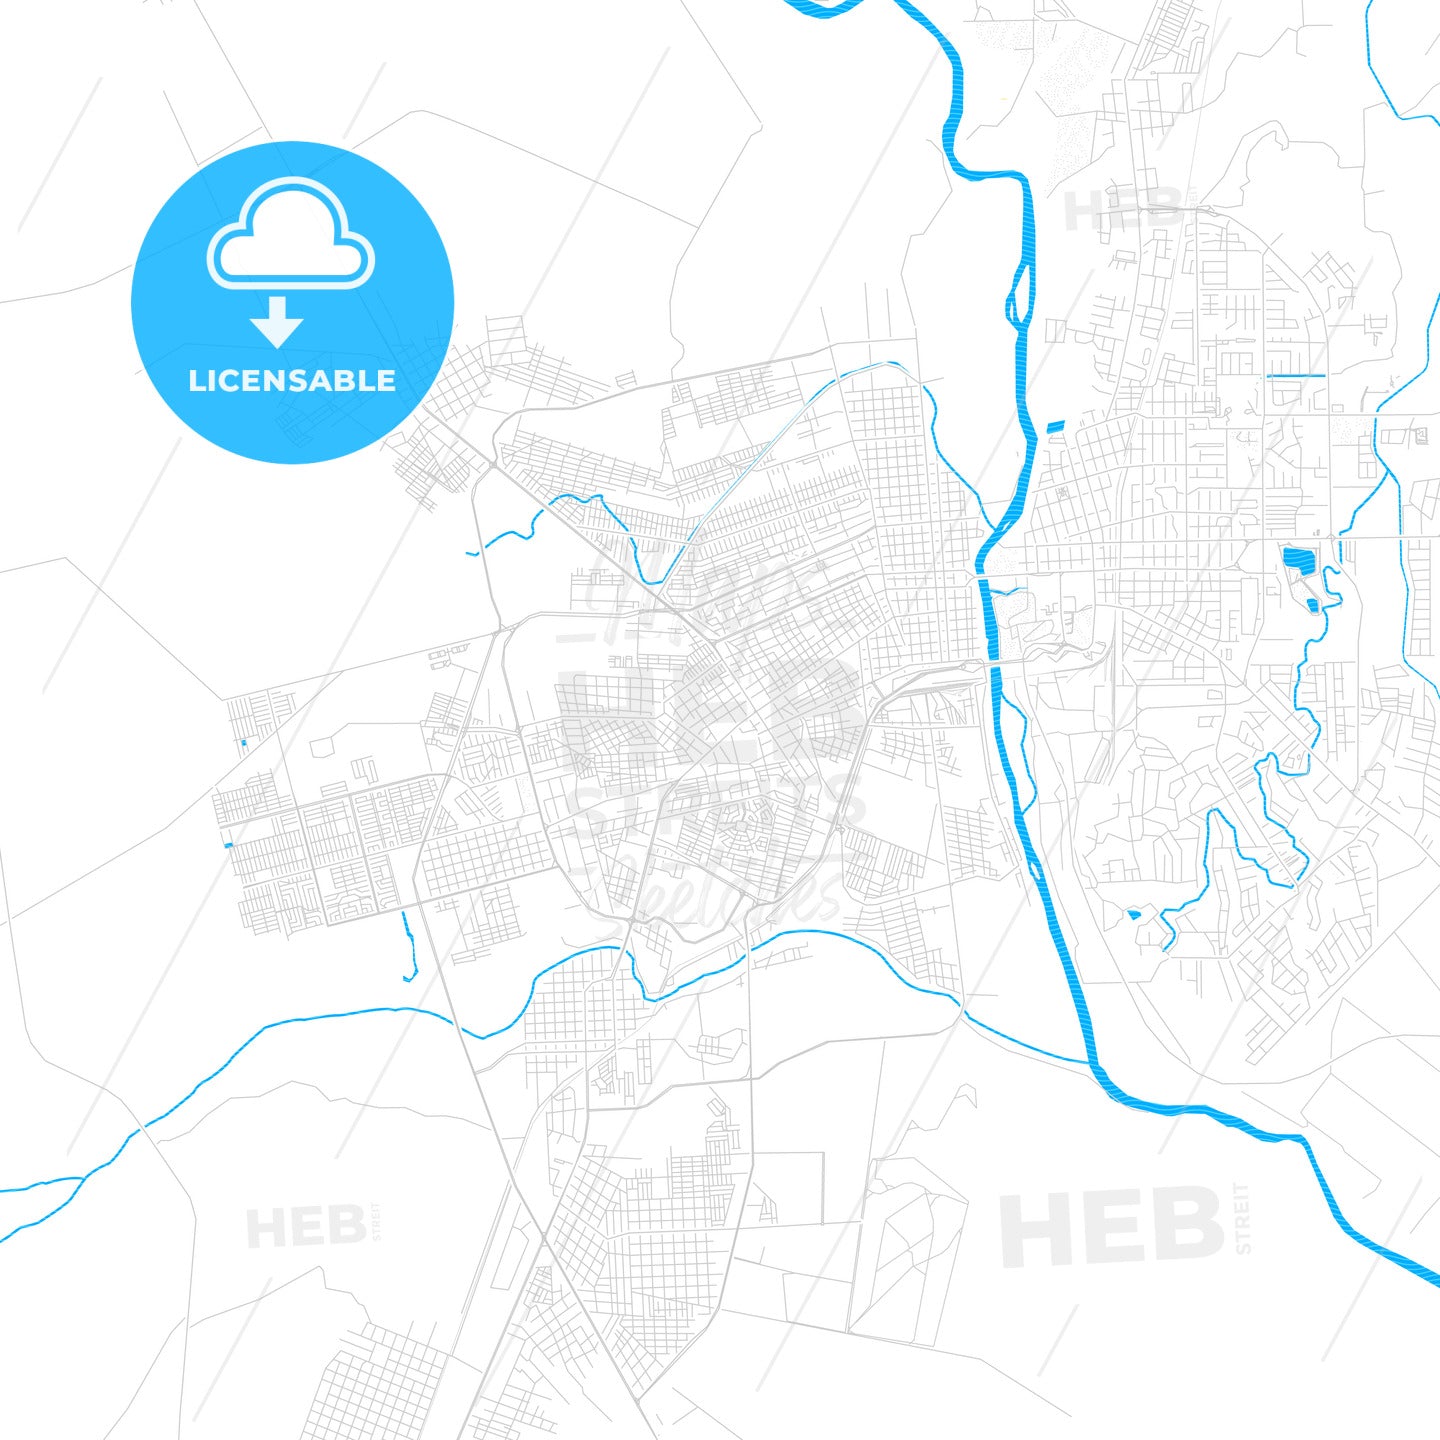 Piedras Negras, Mexico PDF vector map with water in focus